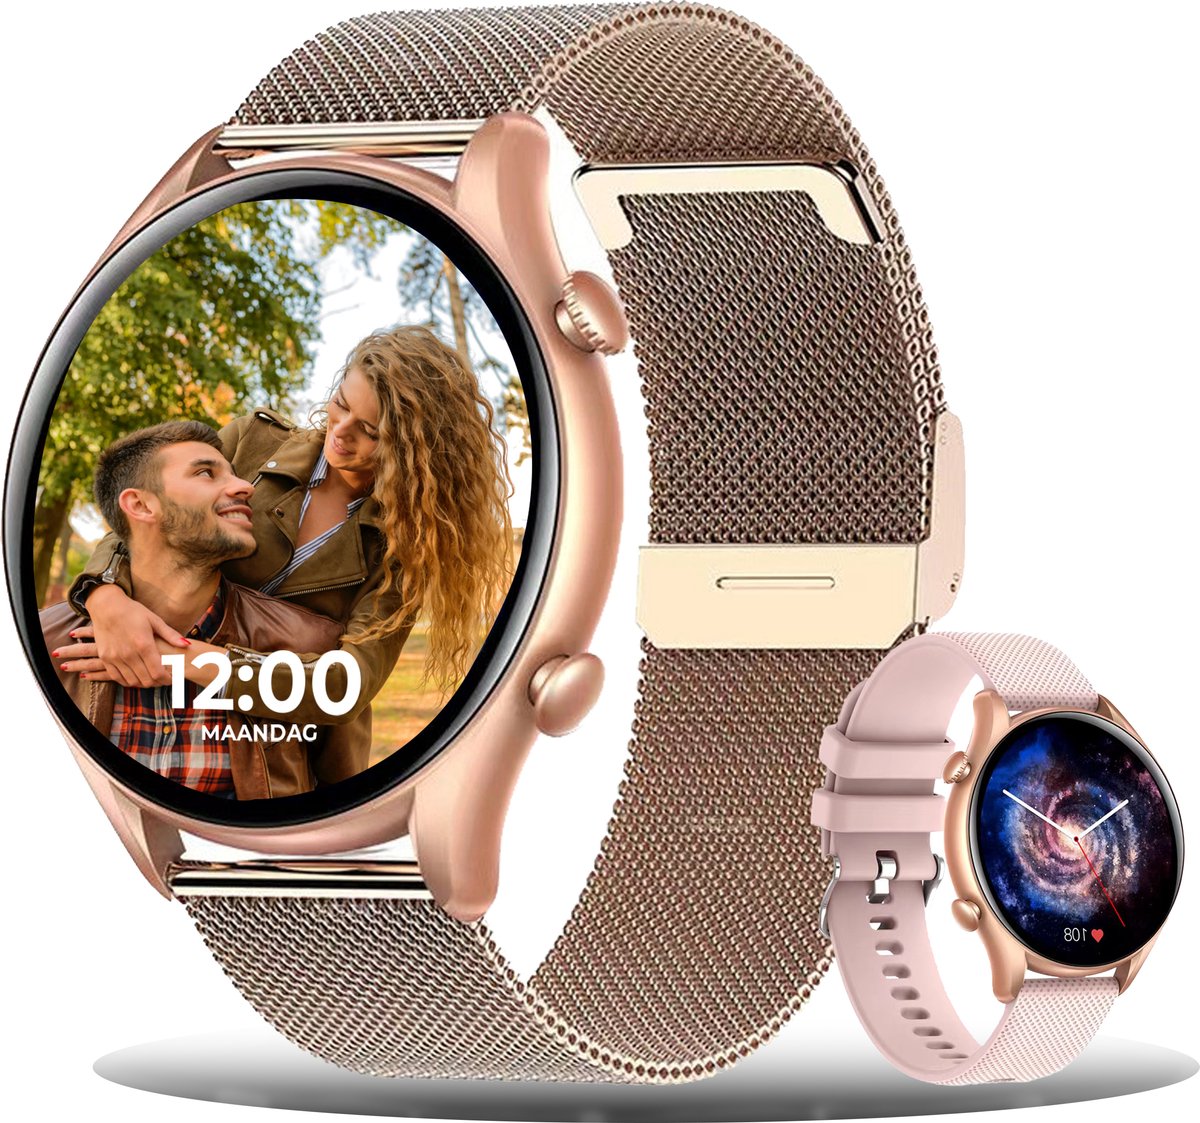 Smartwatch Dames Rosé Goud - iOS en Android - Smartwatches HD Touchscreen - Met Extra Roze Band - Techrie - Techrie